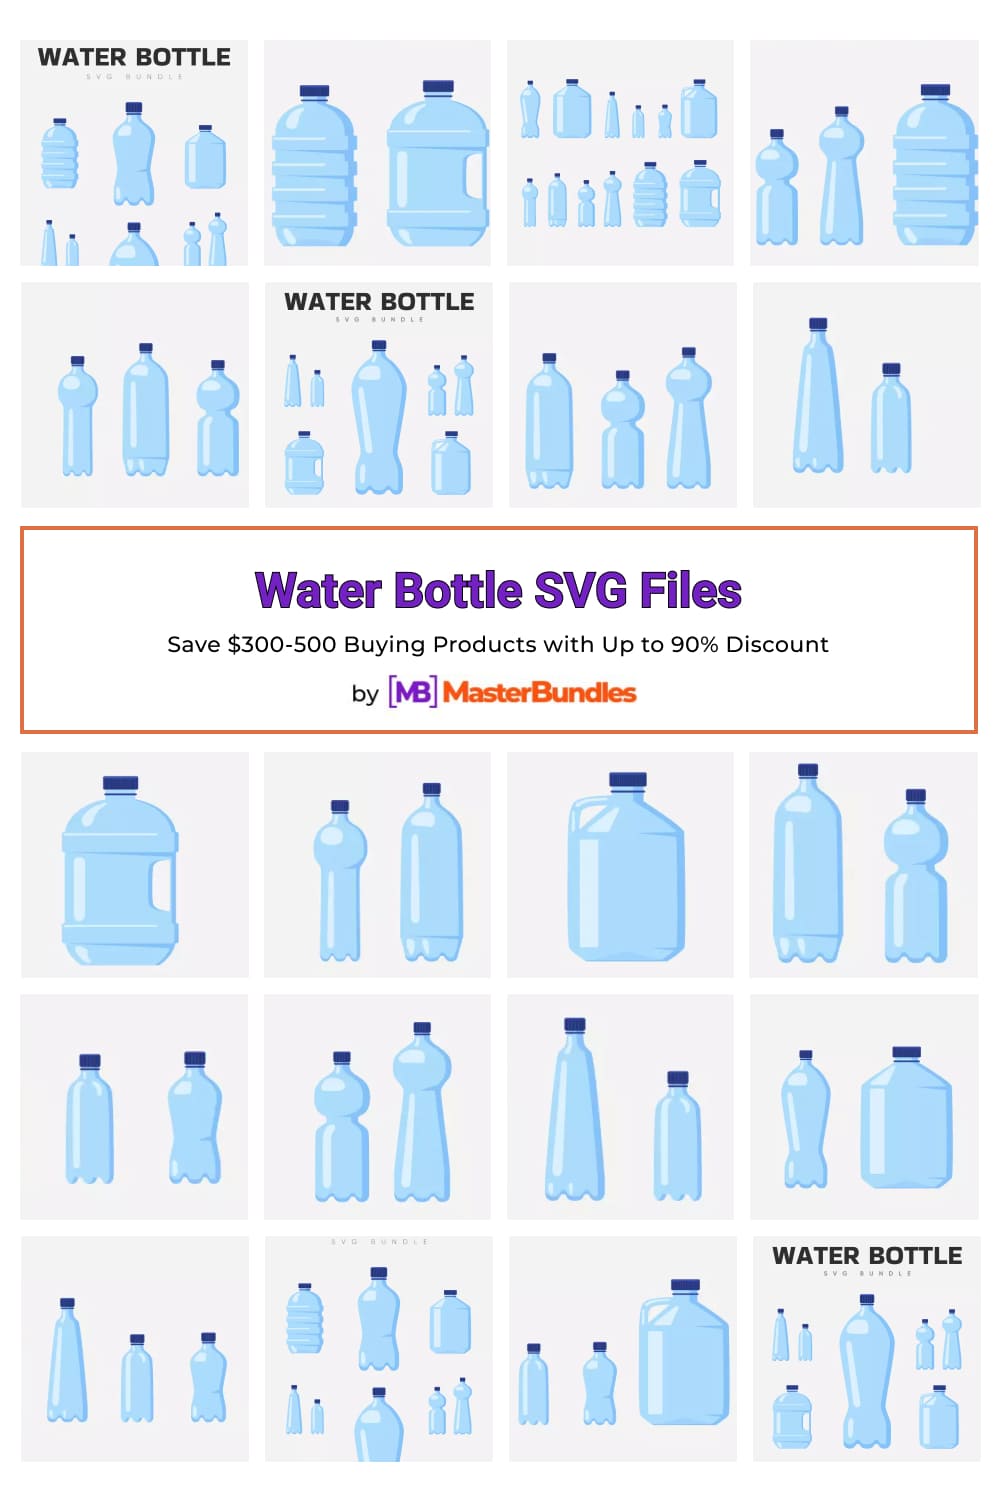 Water Bottle SVG Files Pinterest image.